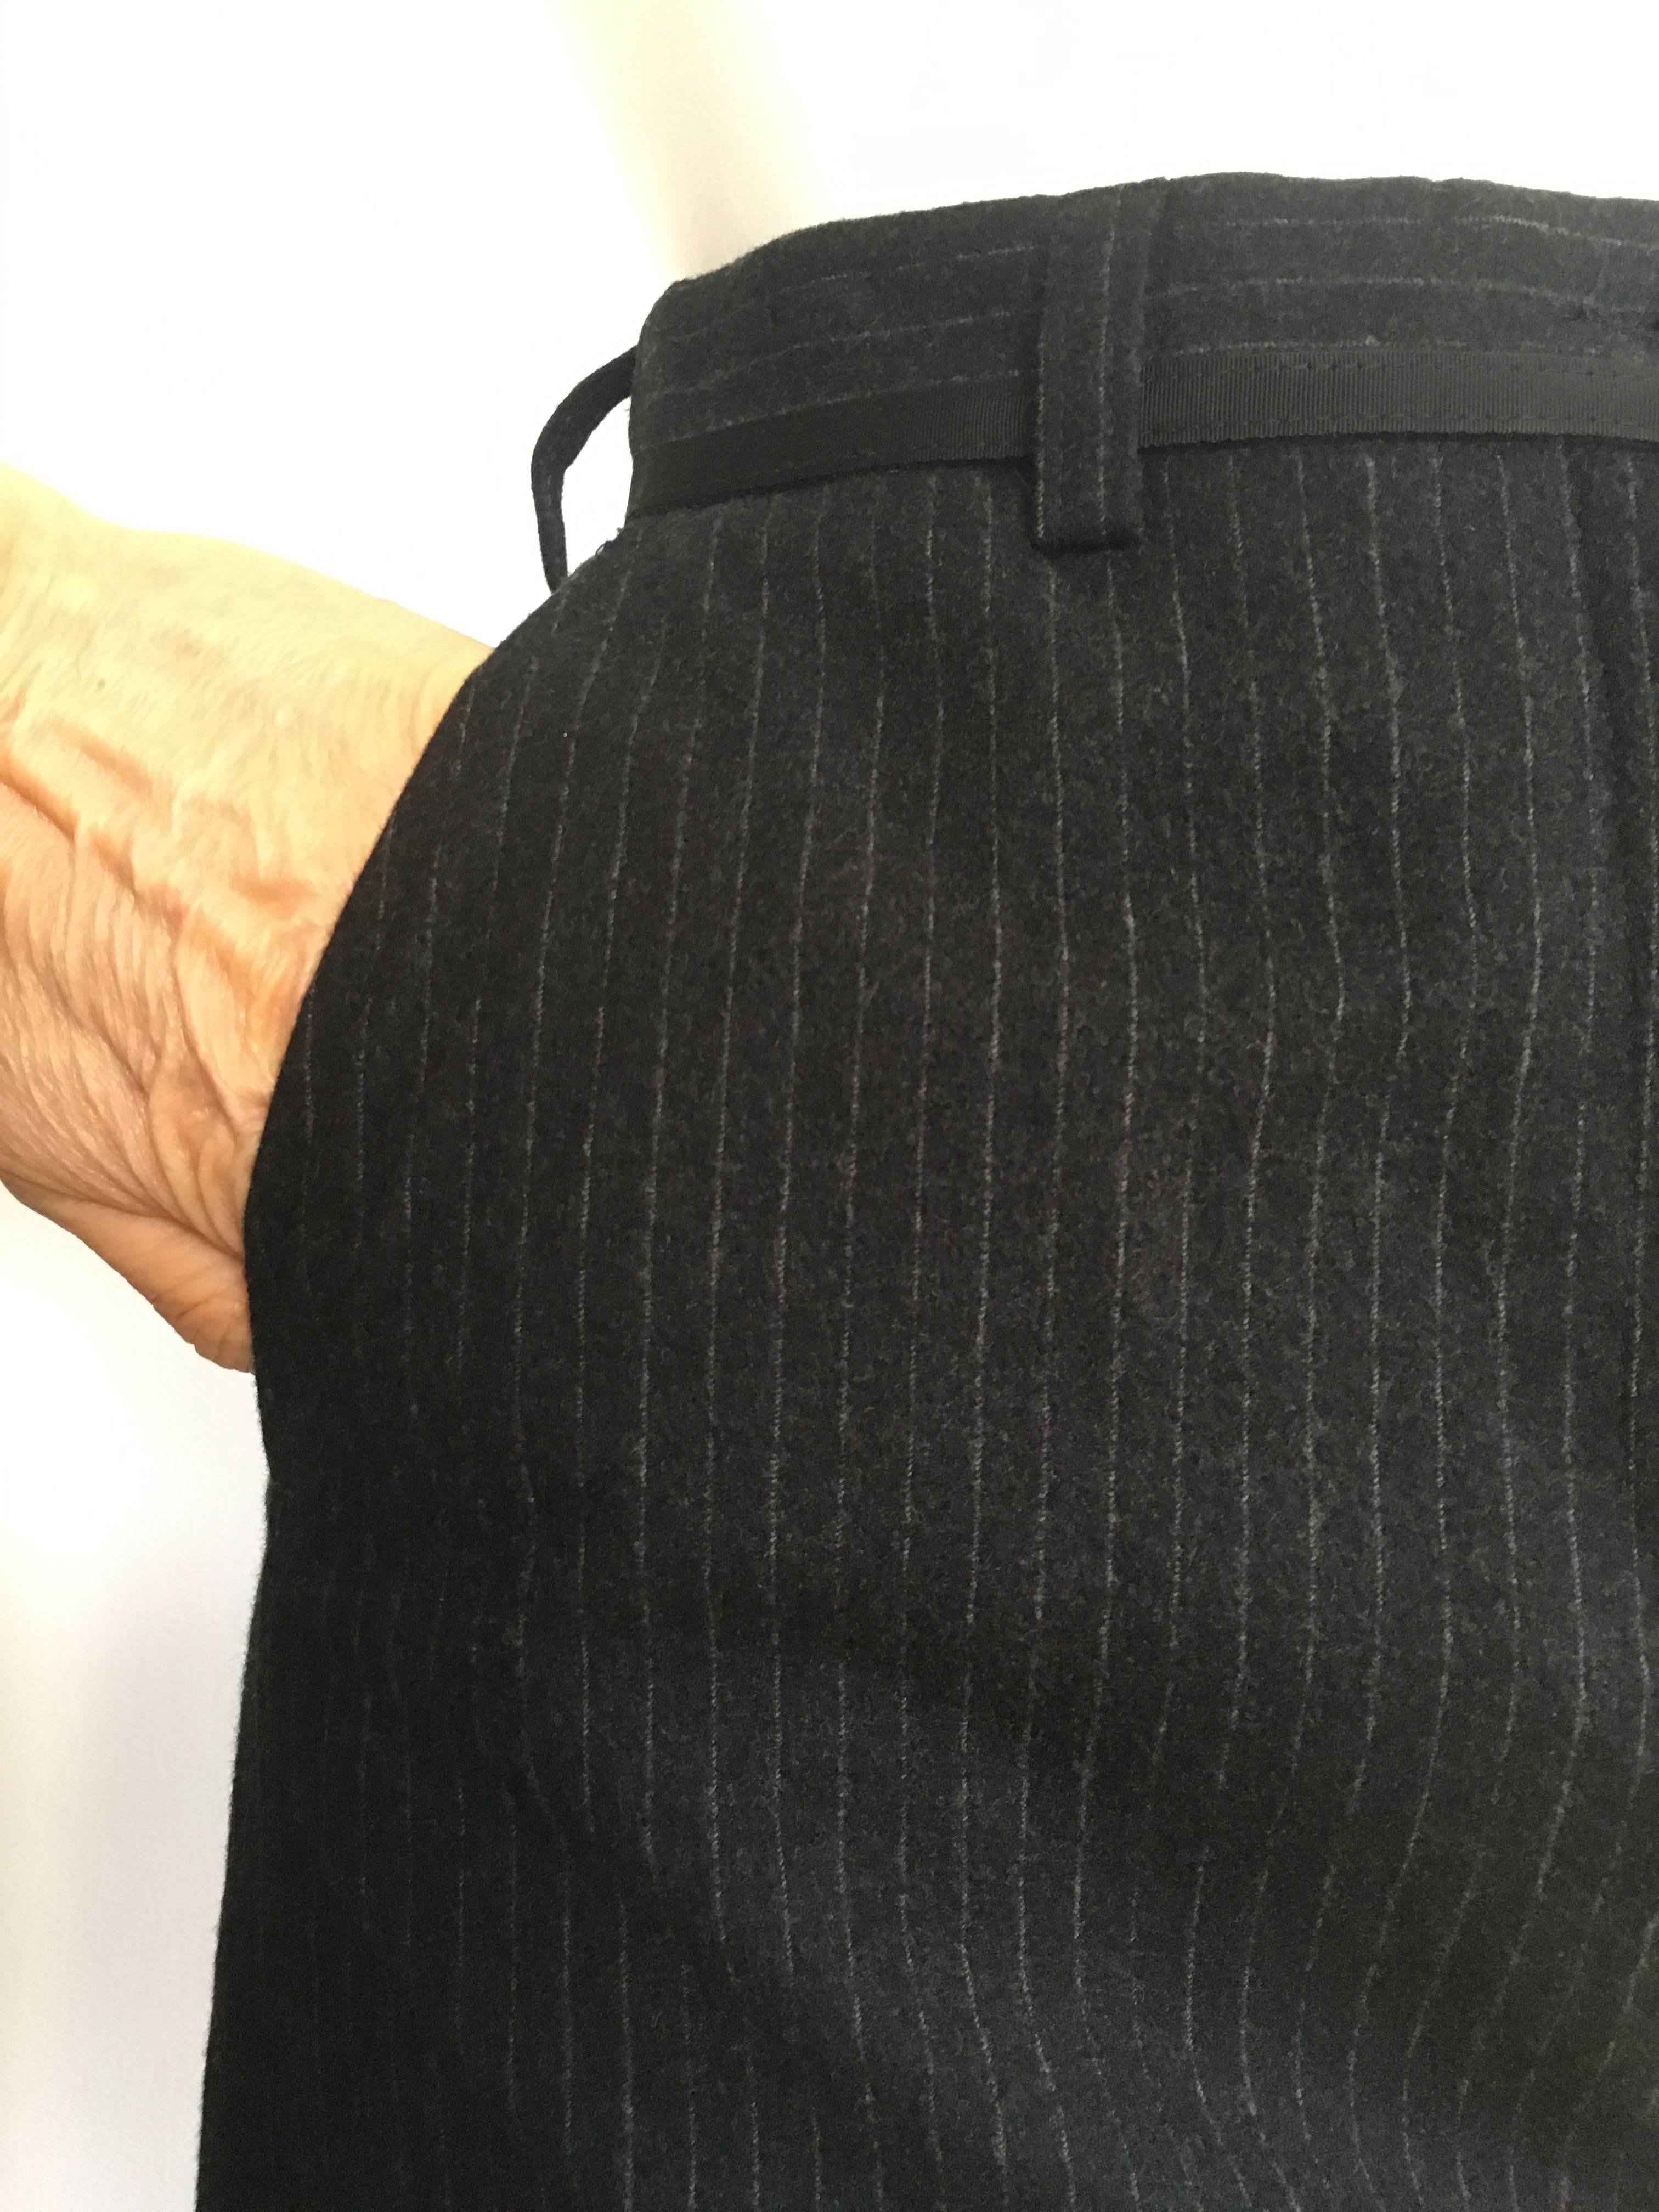 Dries Van Noten Black Pen Strip Wool Skirt with Pockets Size 4/6. For Sale 3